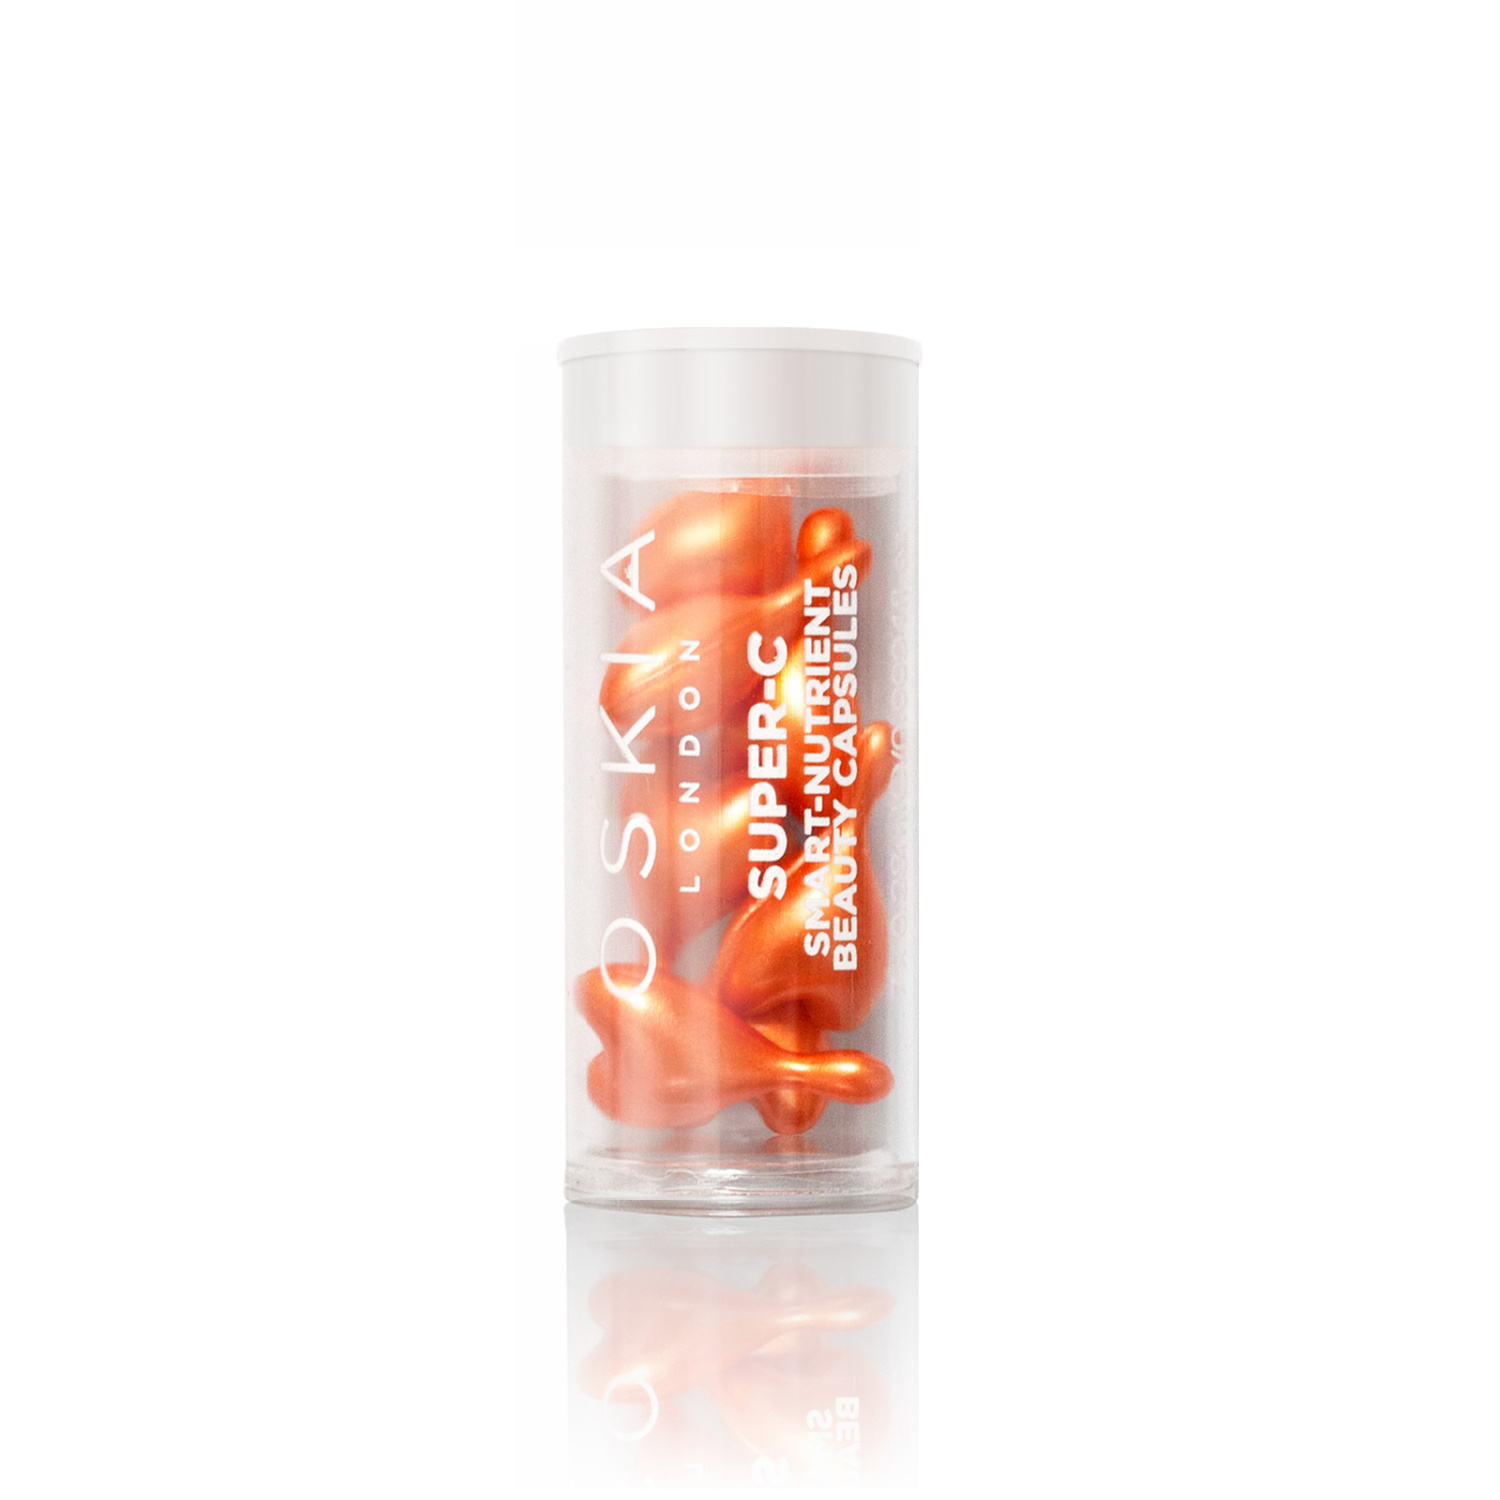 OSKIA Super-C Smart Nutrient Beauty Capsules 7p - интернет-магазин профессиональной косметики Spadream, изображение 45275